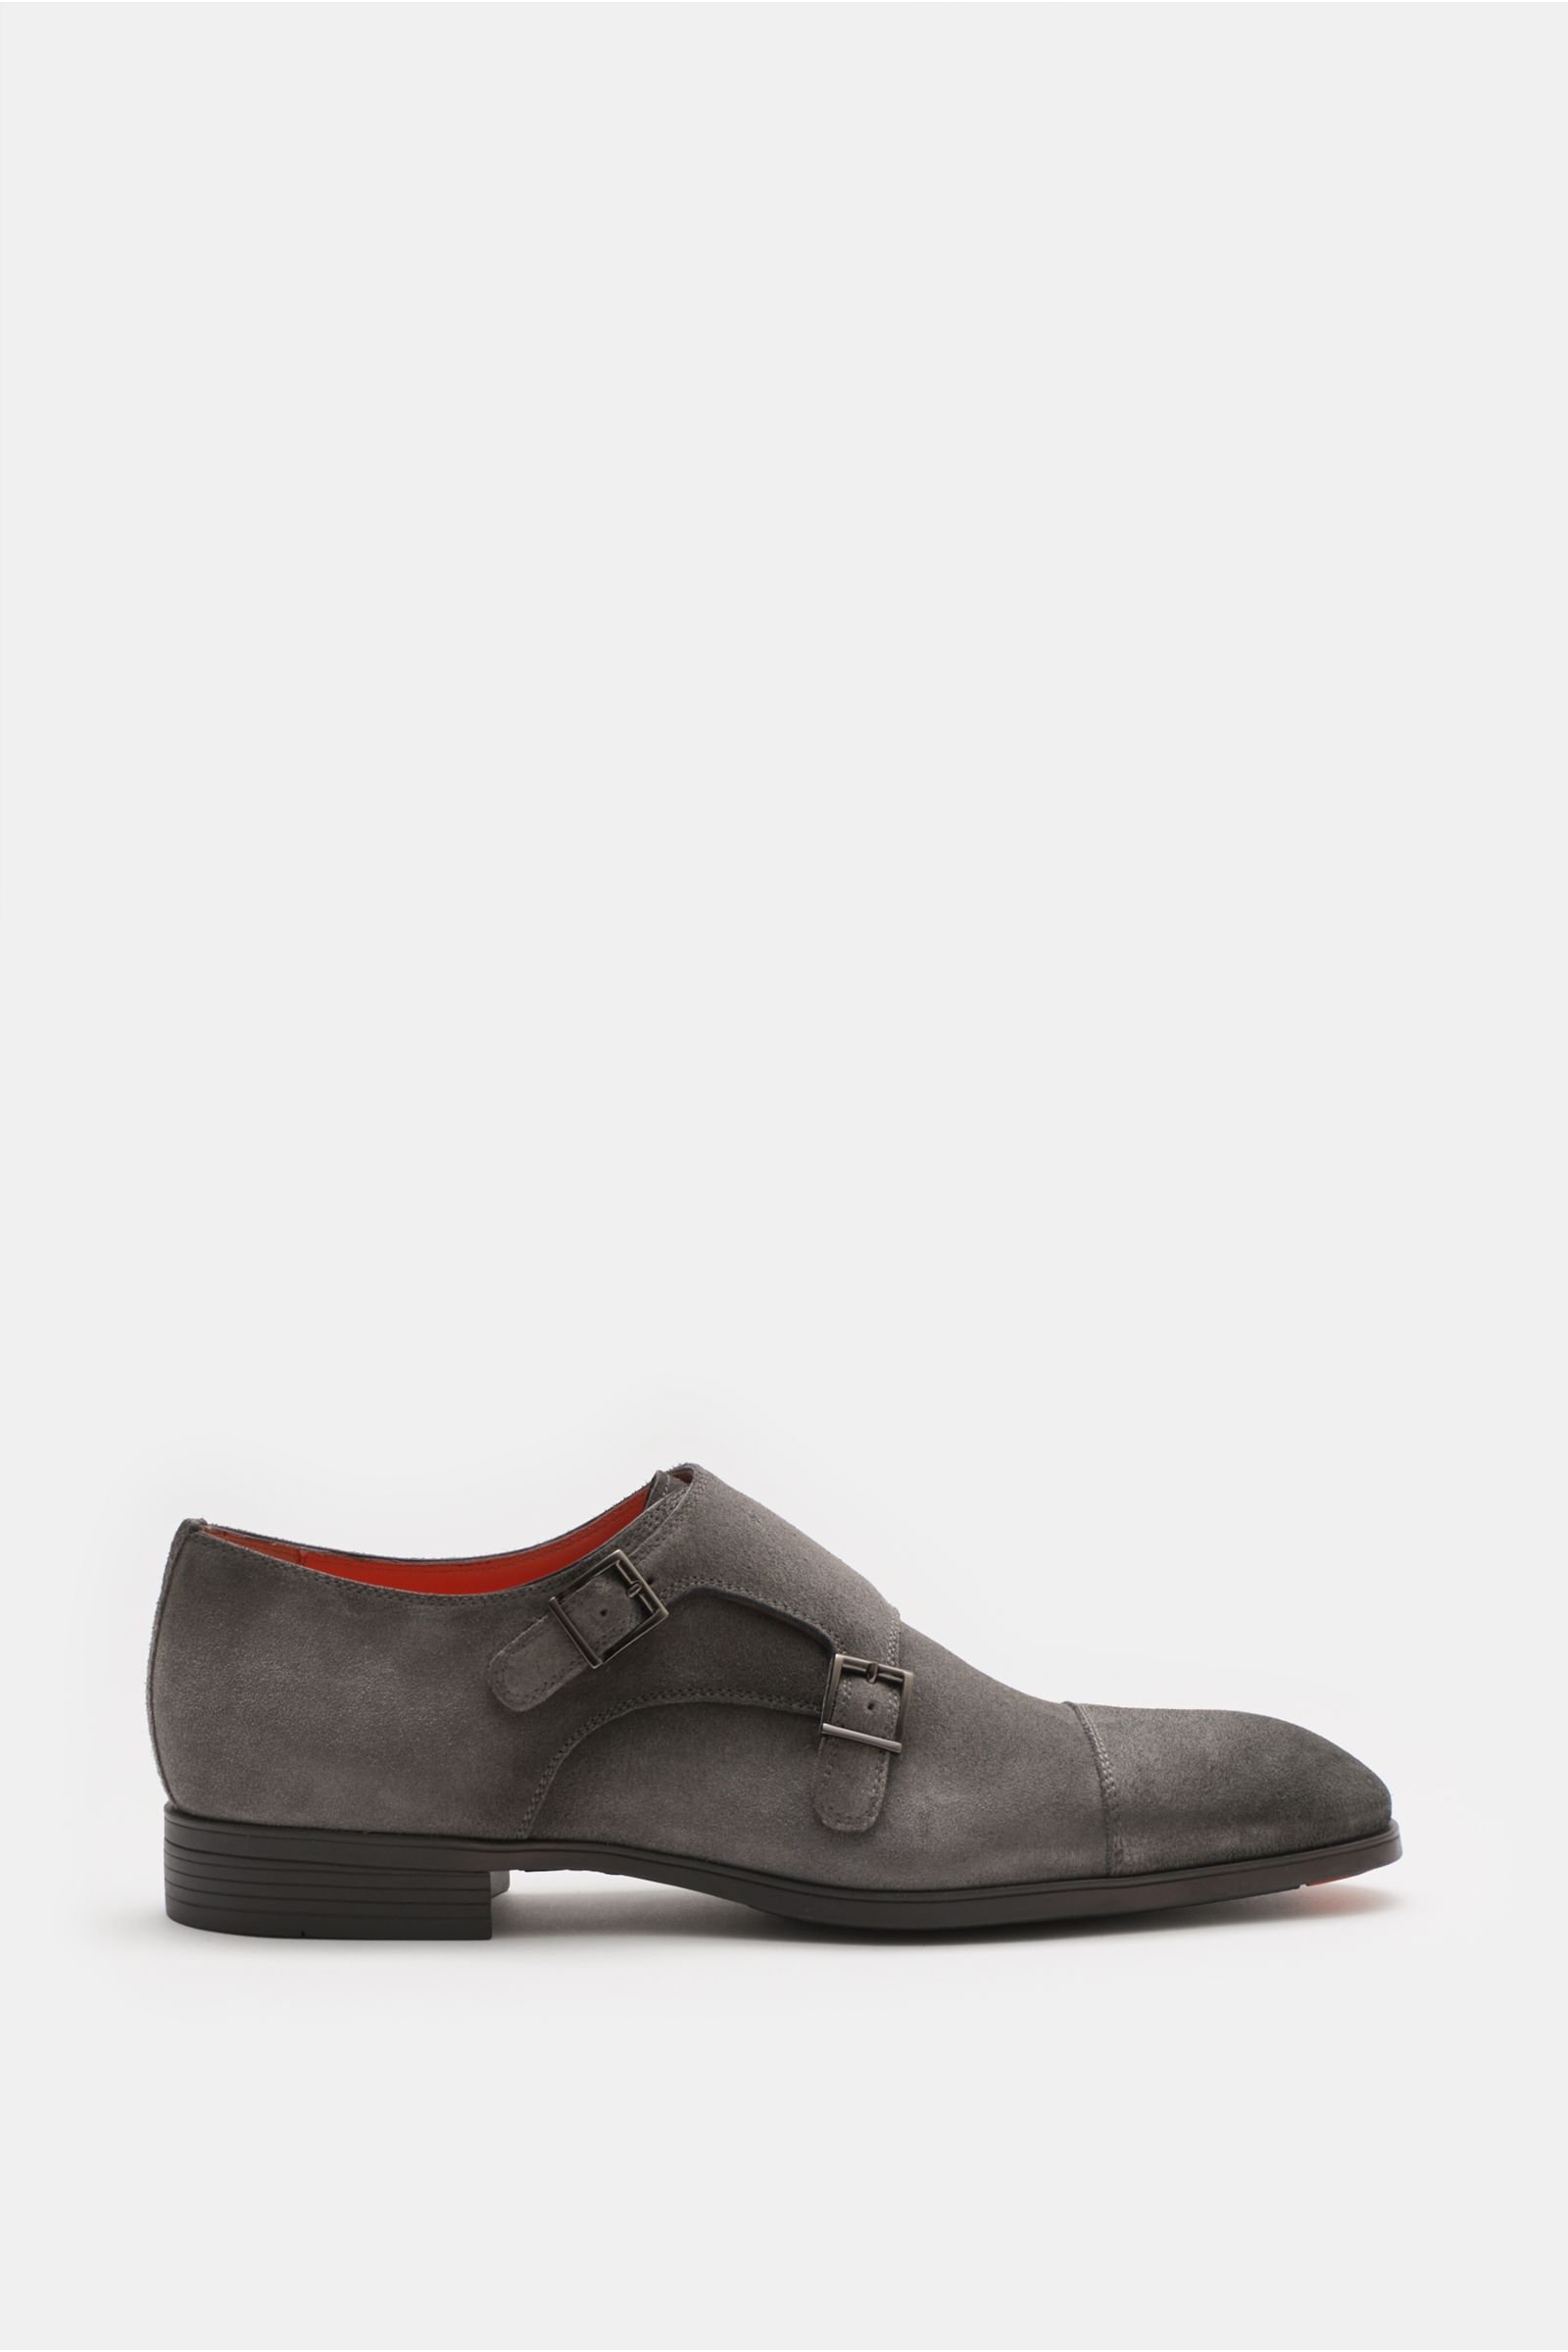 Double monk shoes grey